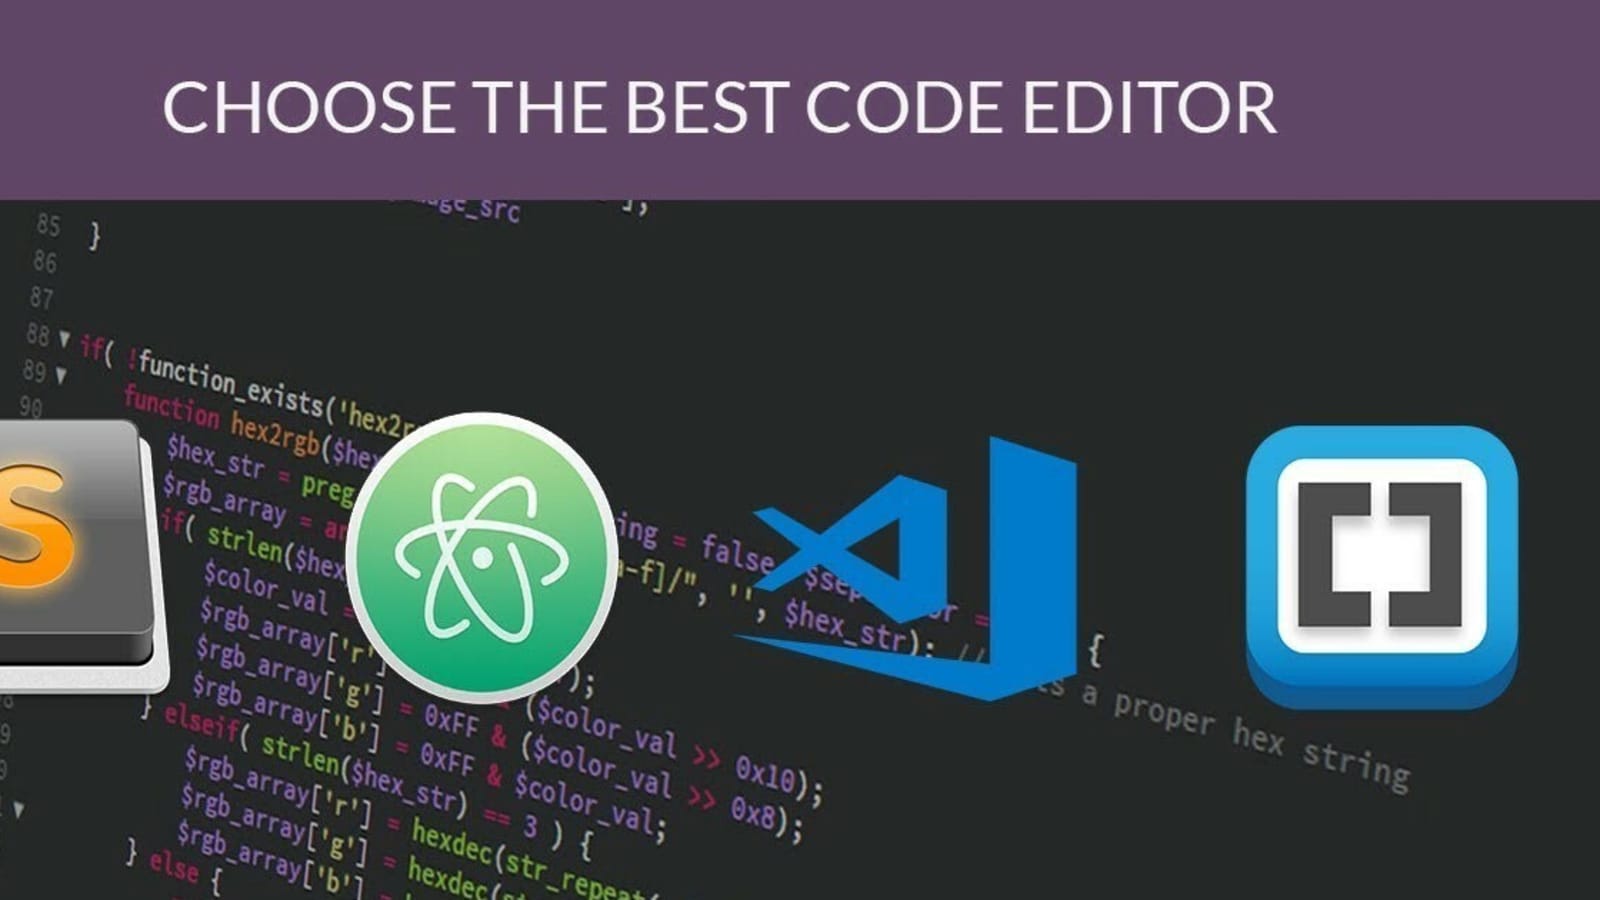 The code editor